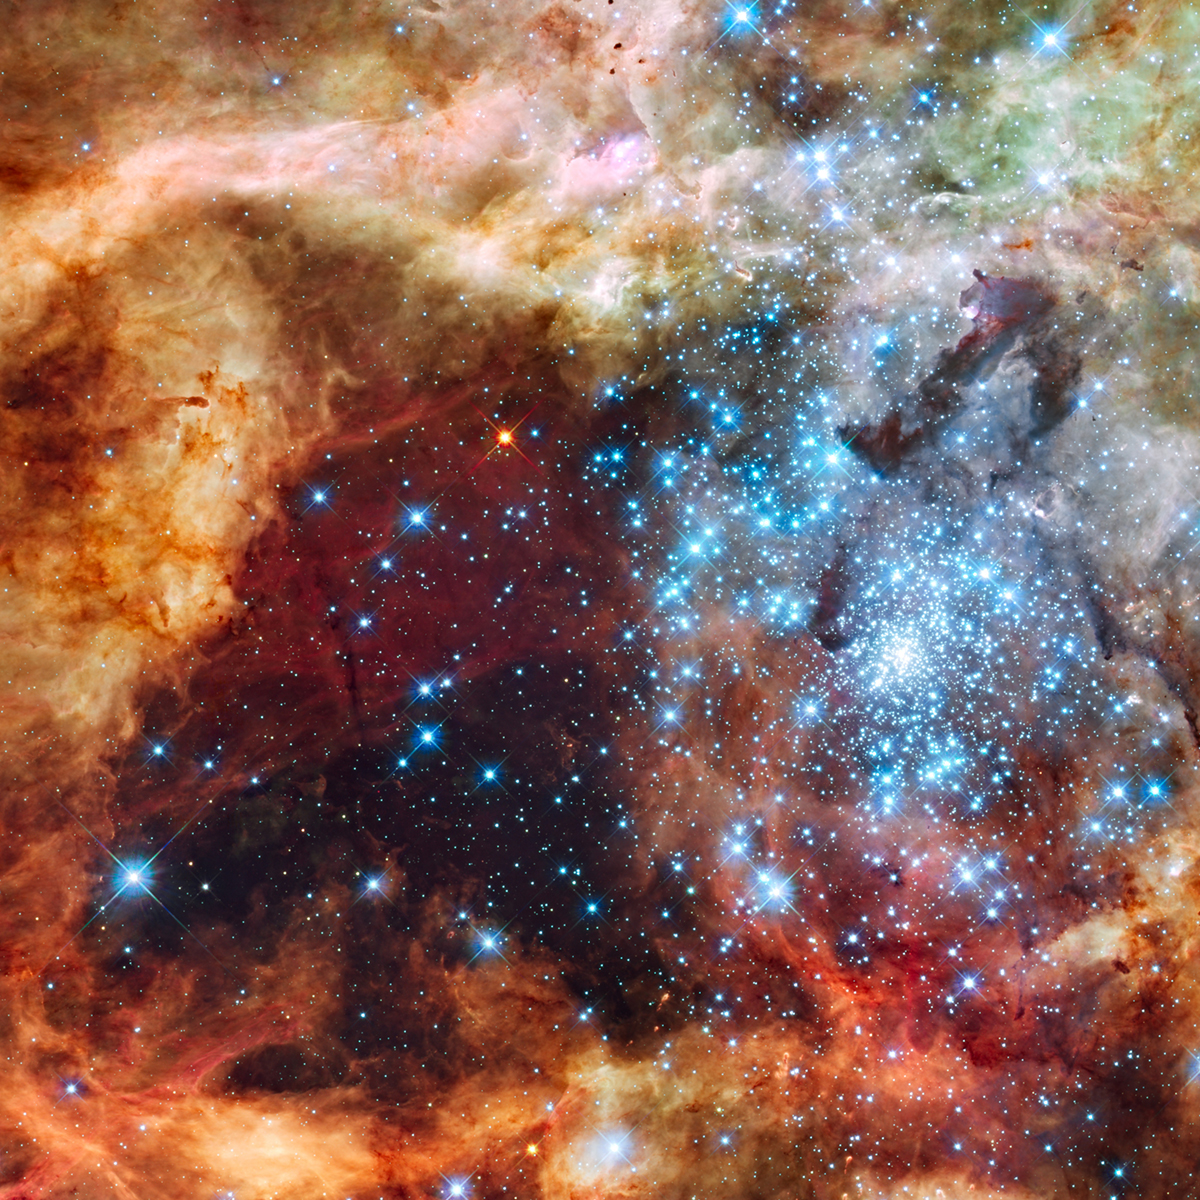 stellar clusters